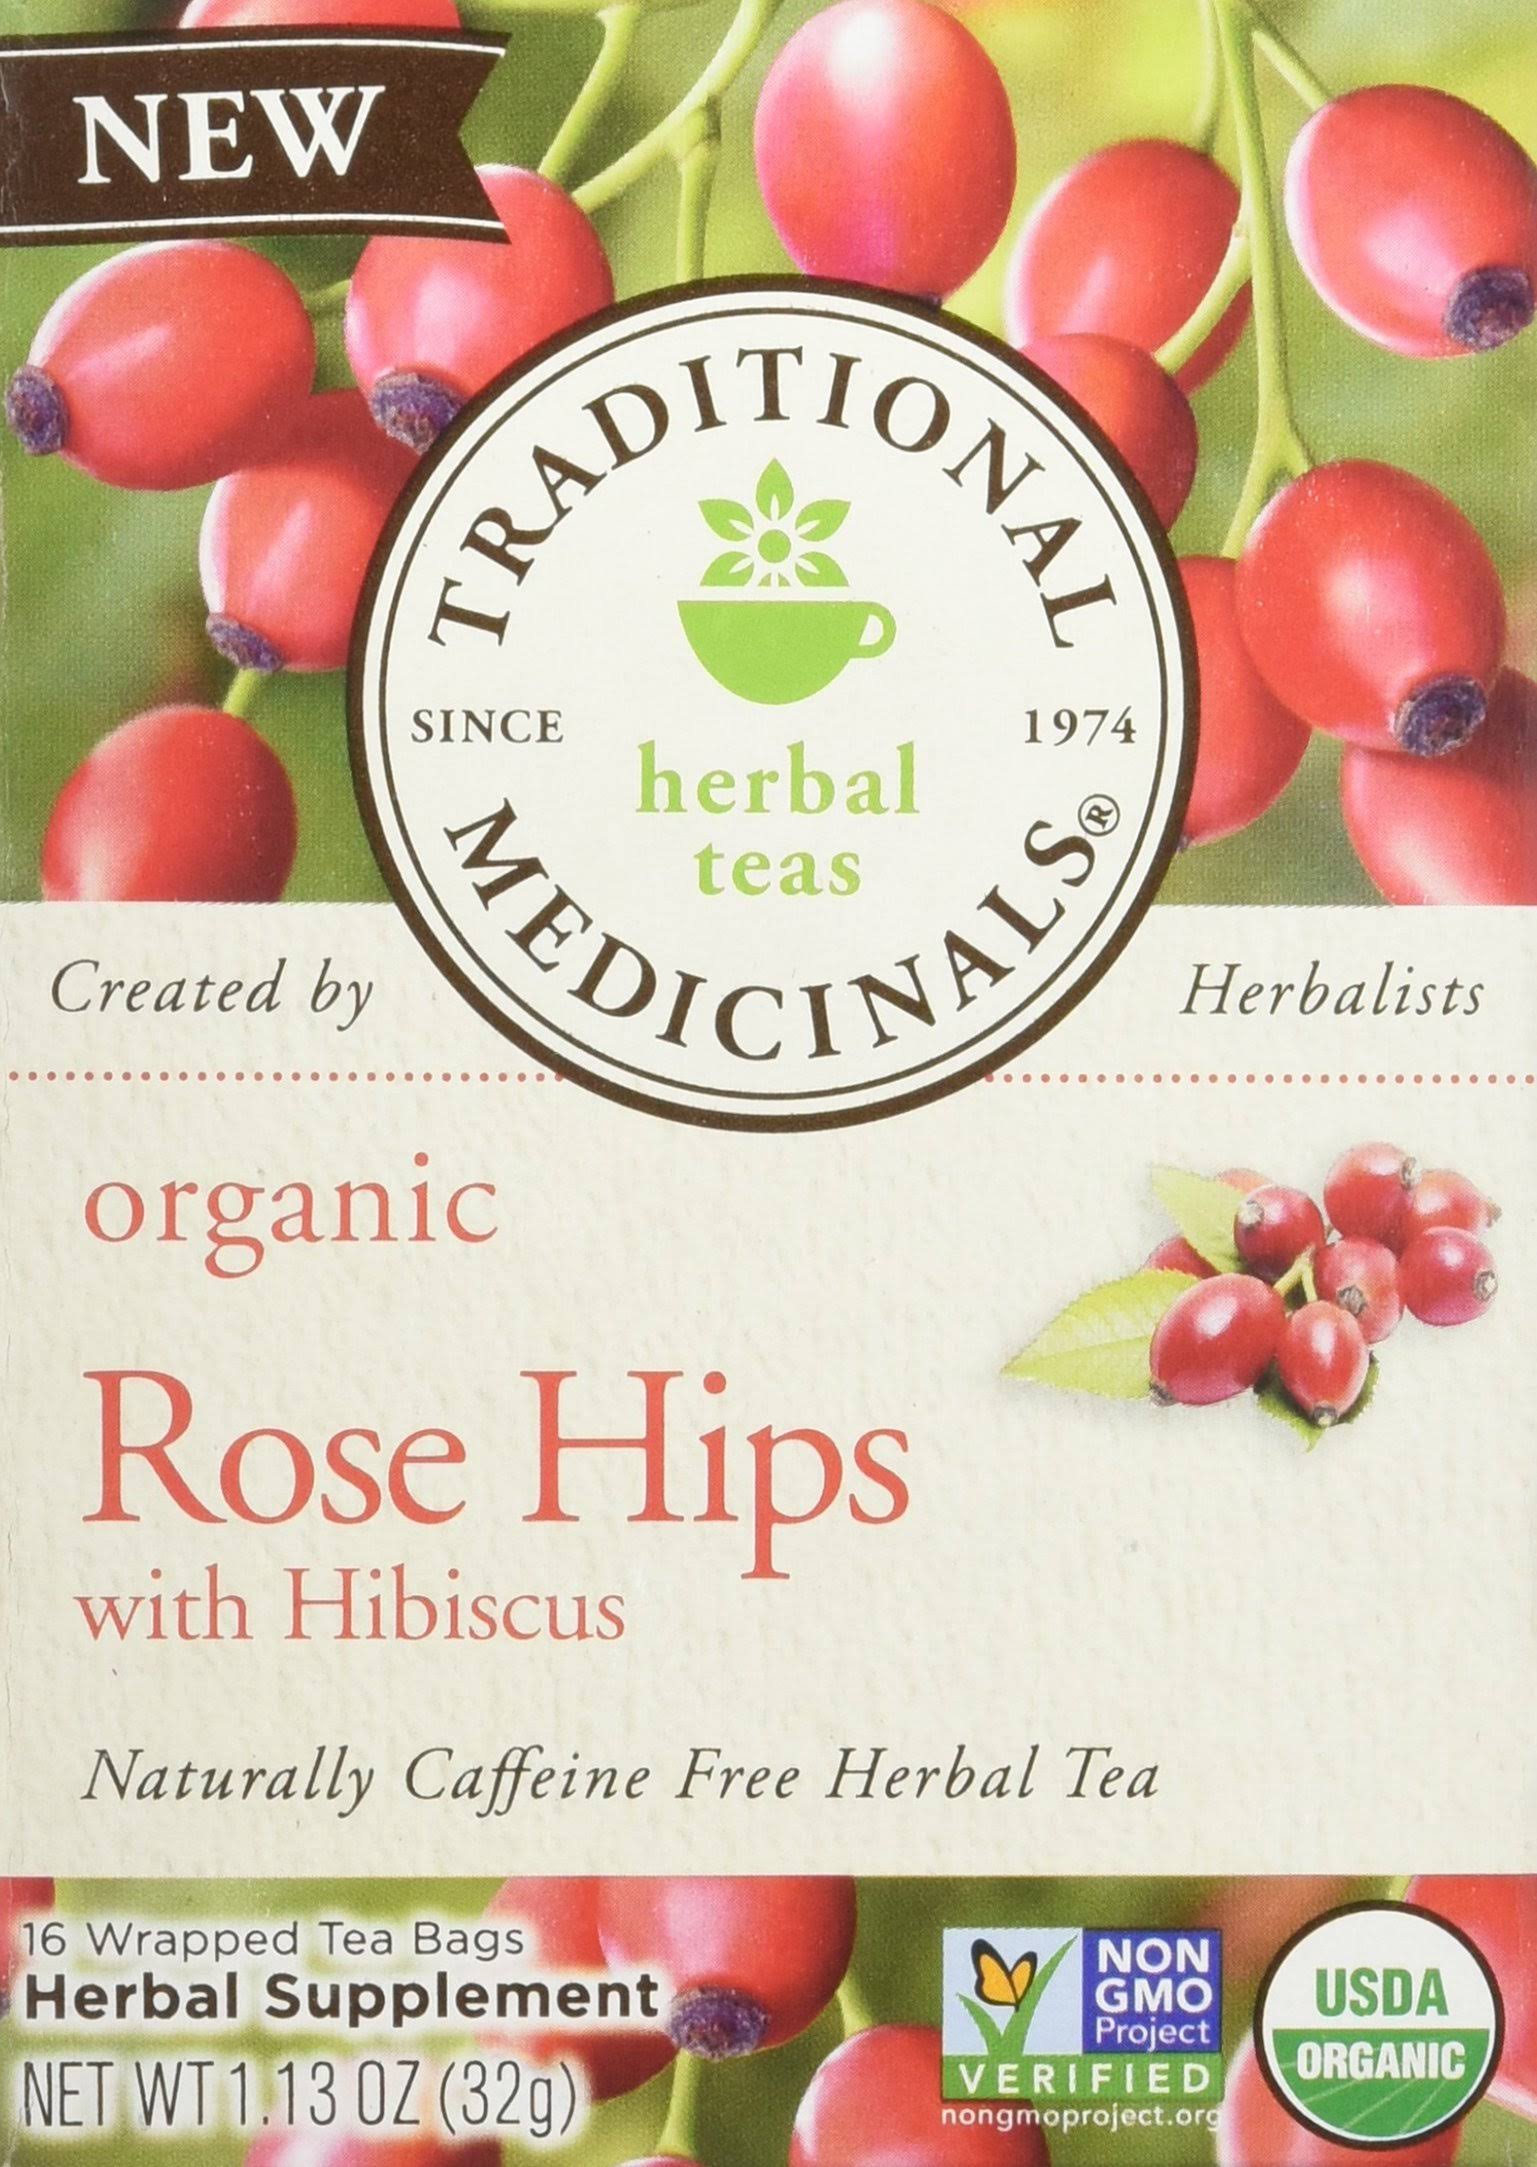 Traditional Medicinals Organic Herbal Tea, Rose Hips with Hibiscus - 16 tea bags, 1.13 oz box